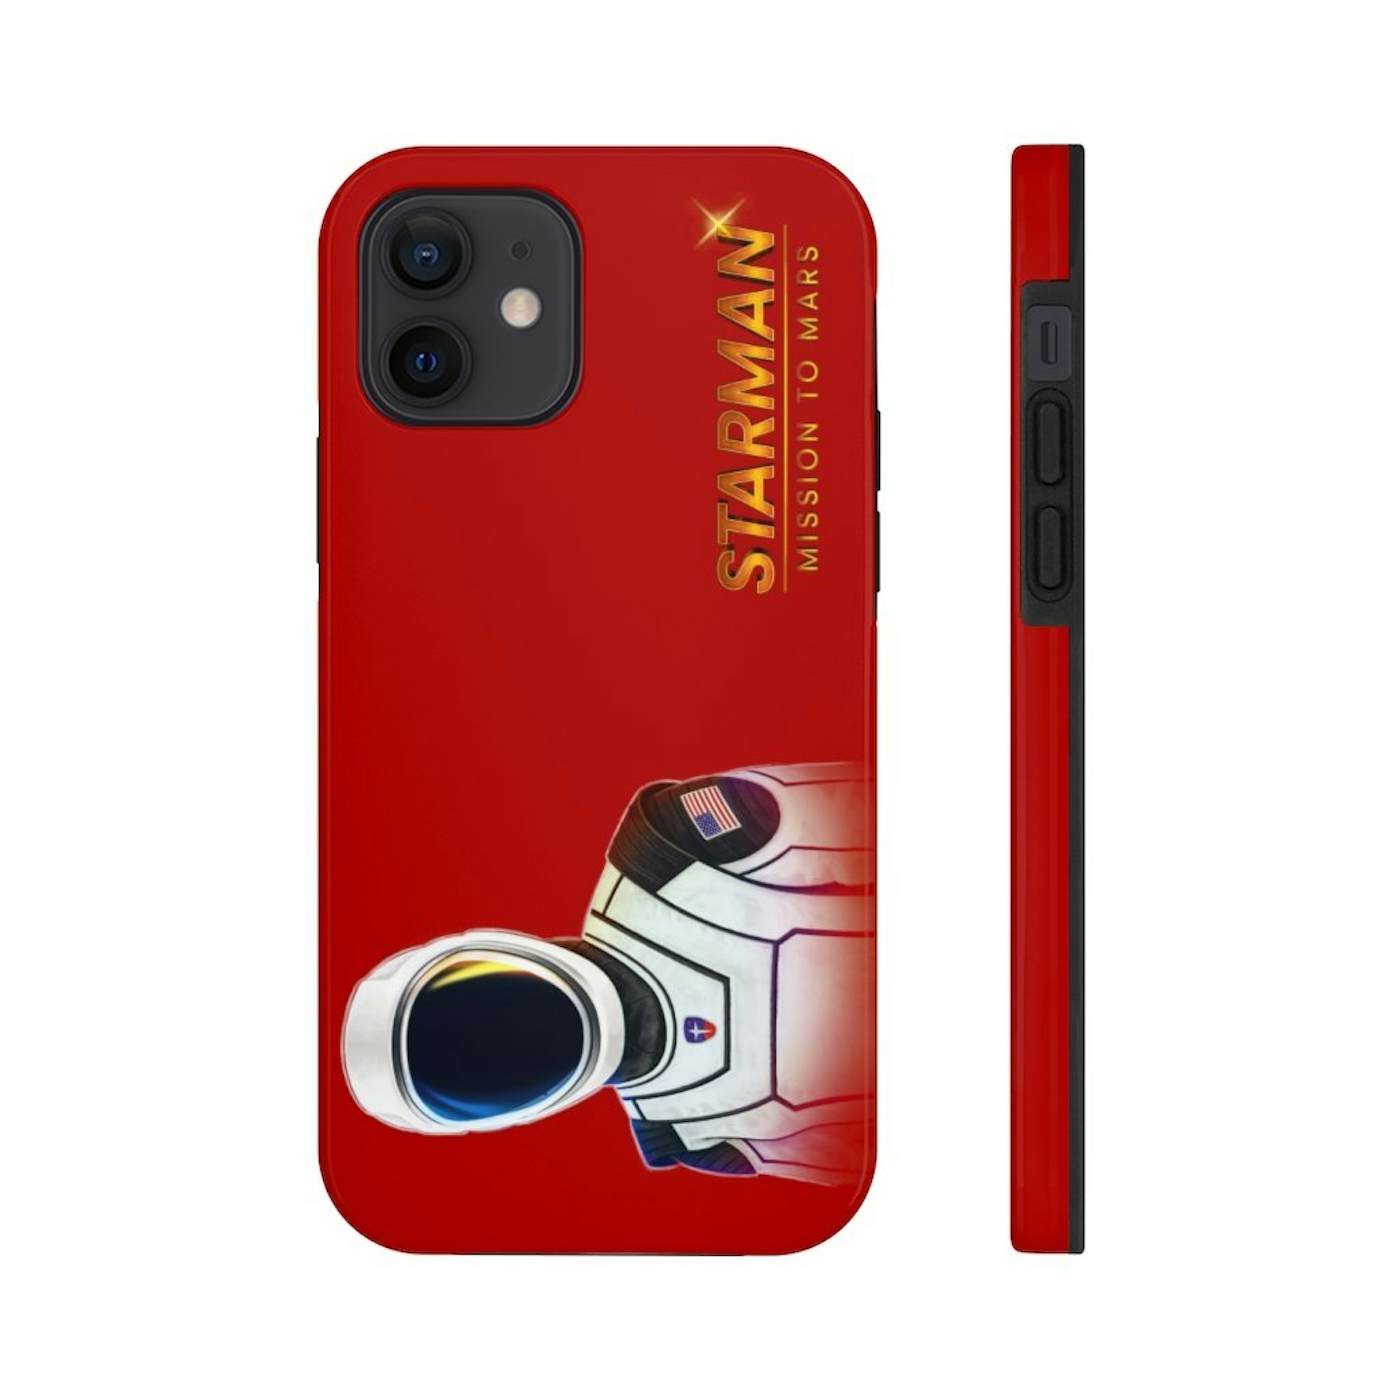 Joe Steven Starman iPhone Case (Red)